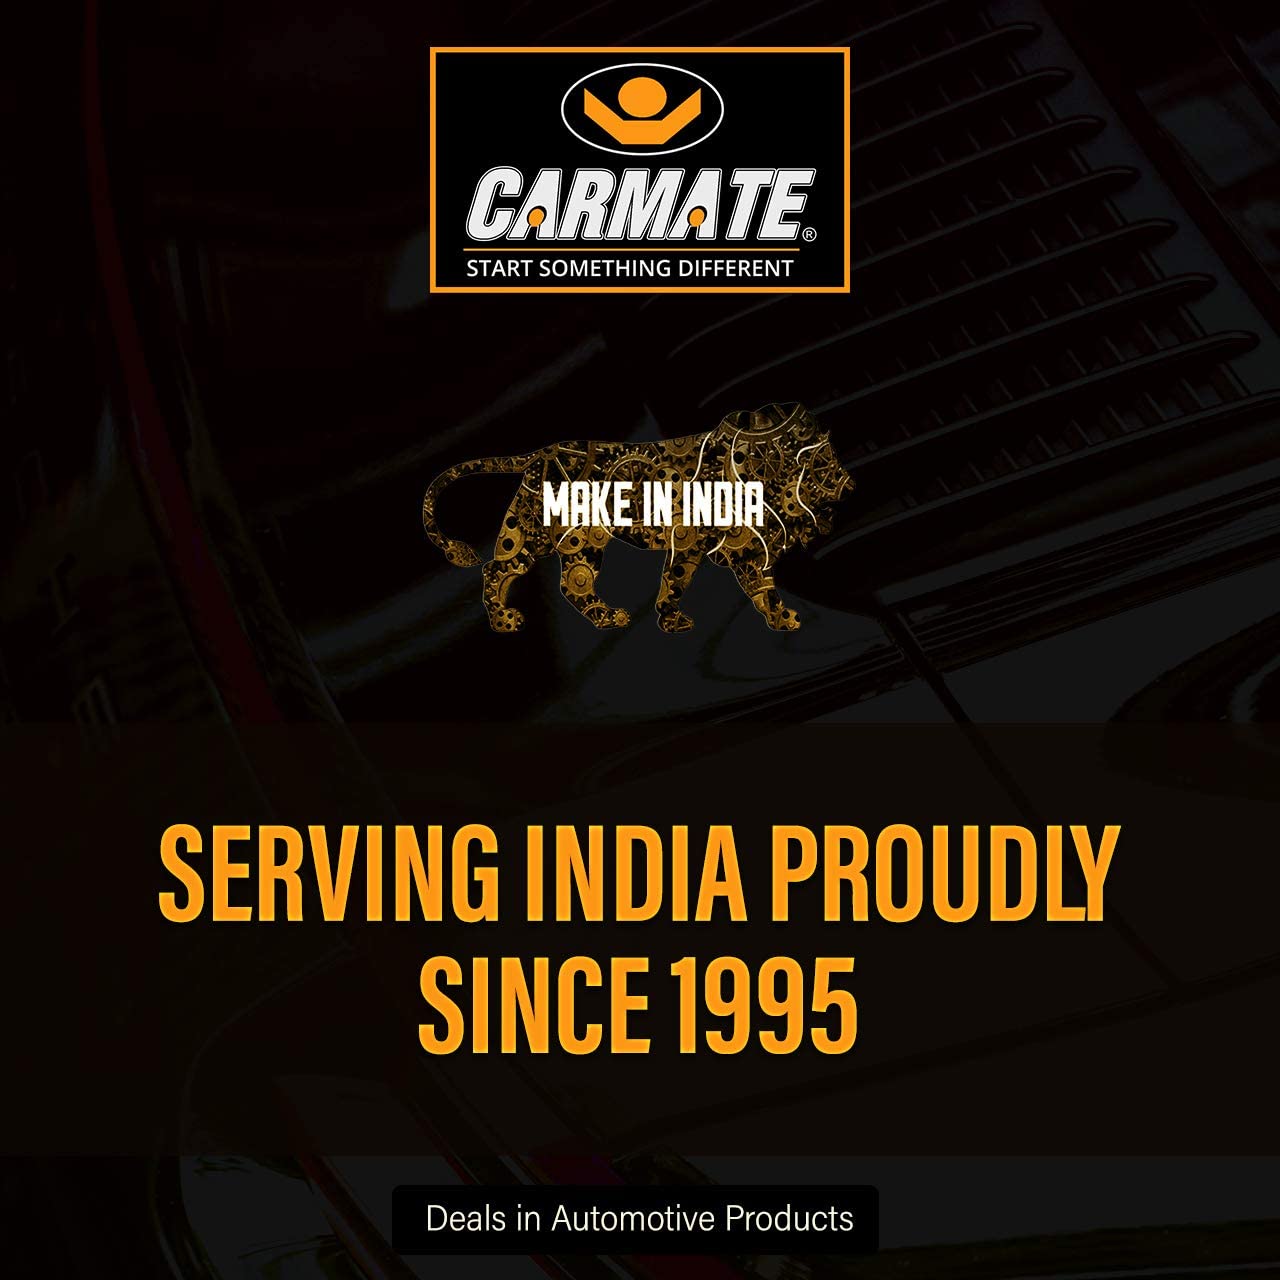 Carmate Passion Car Body Cover (Black and Orange) for Mahindra - Thar 2020 - CARMATE®